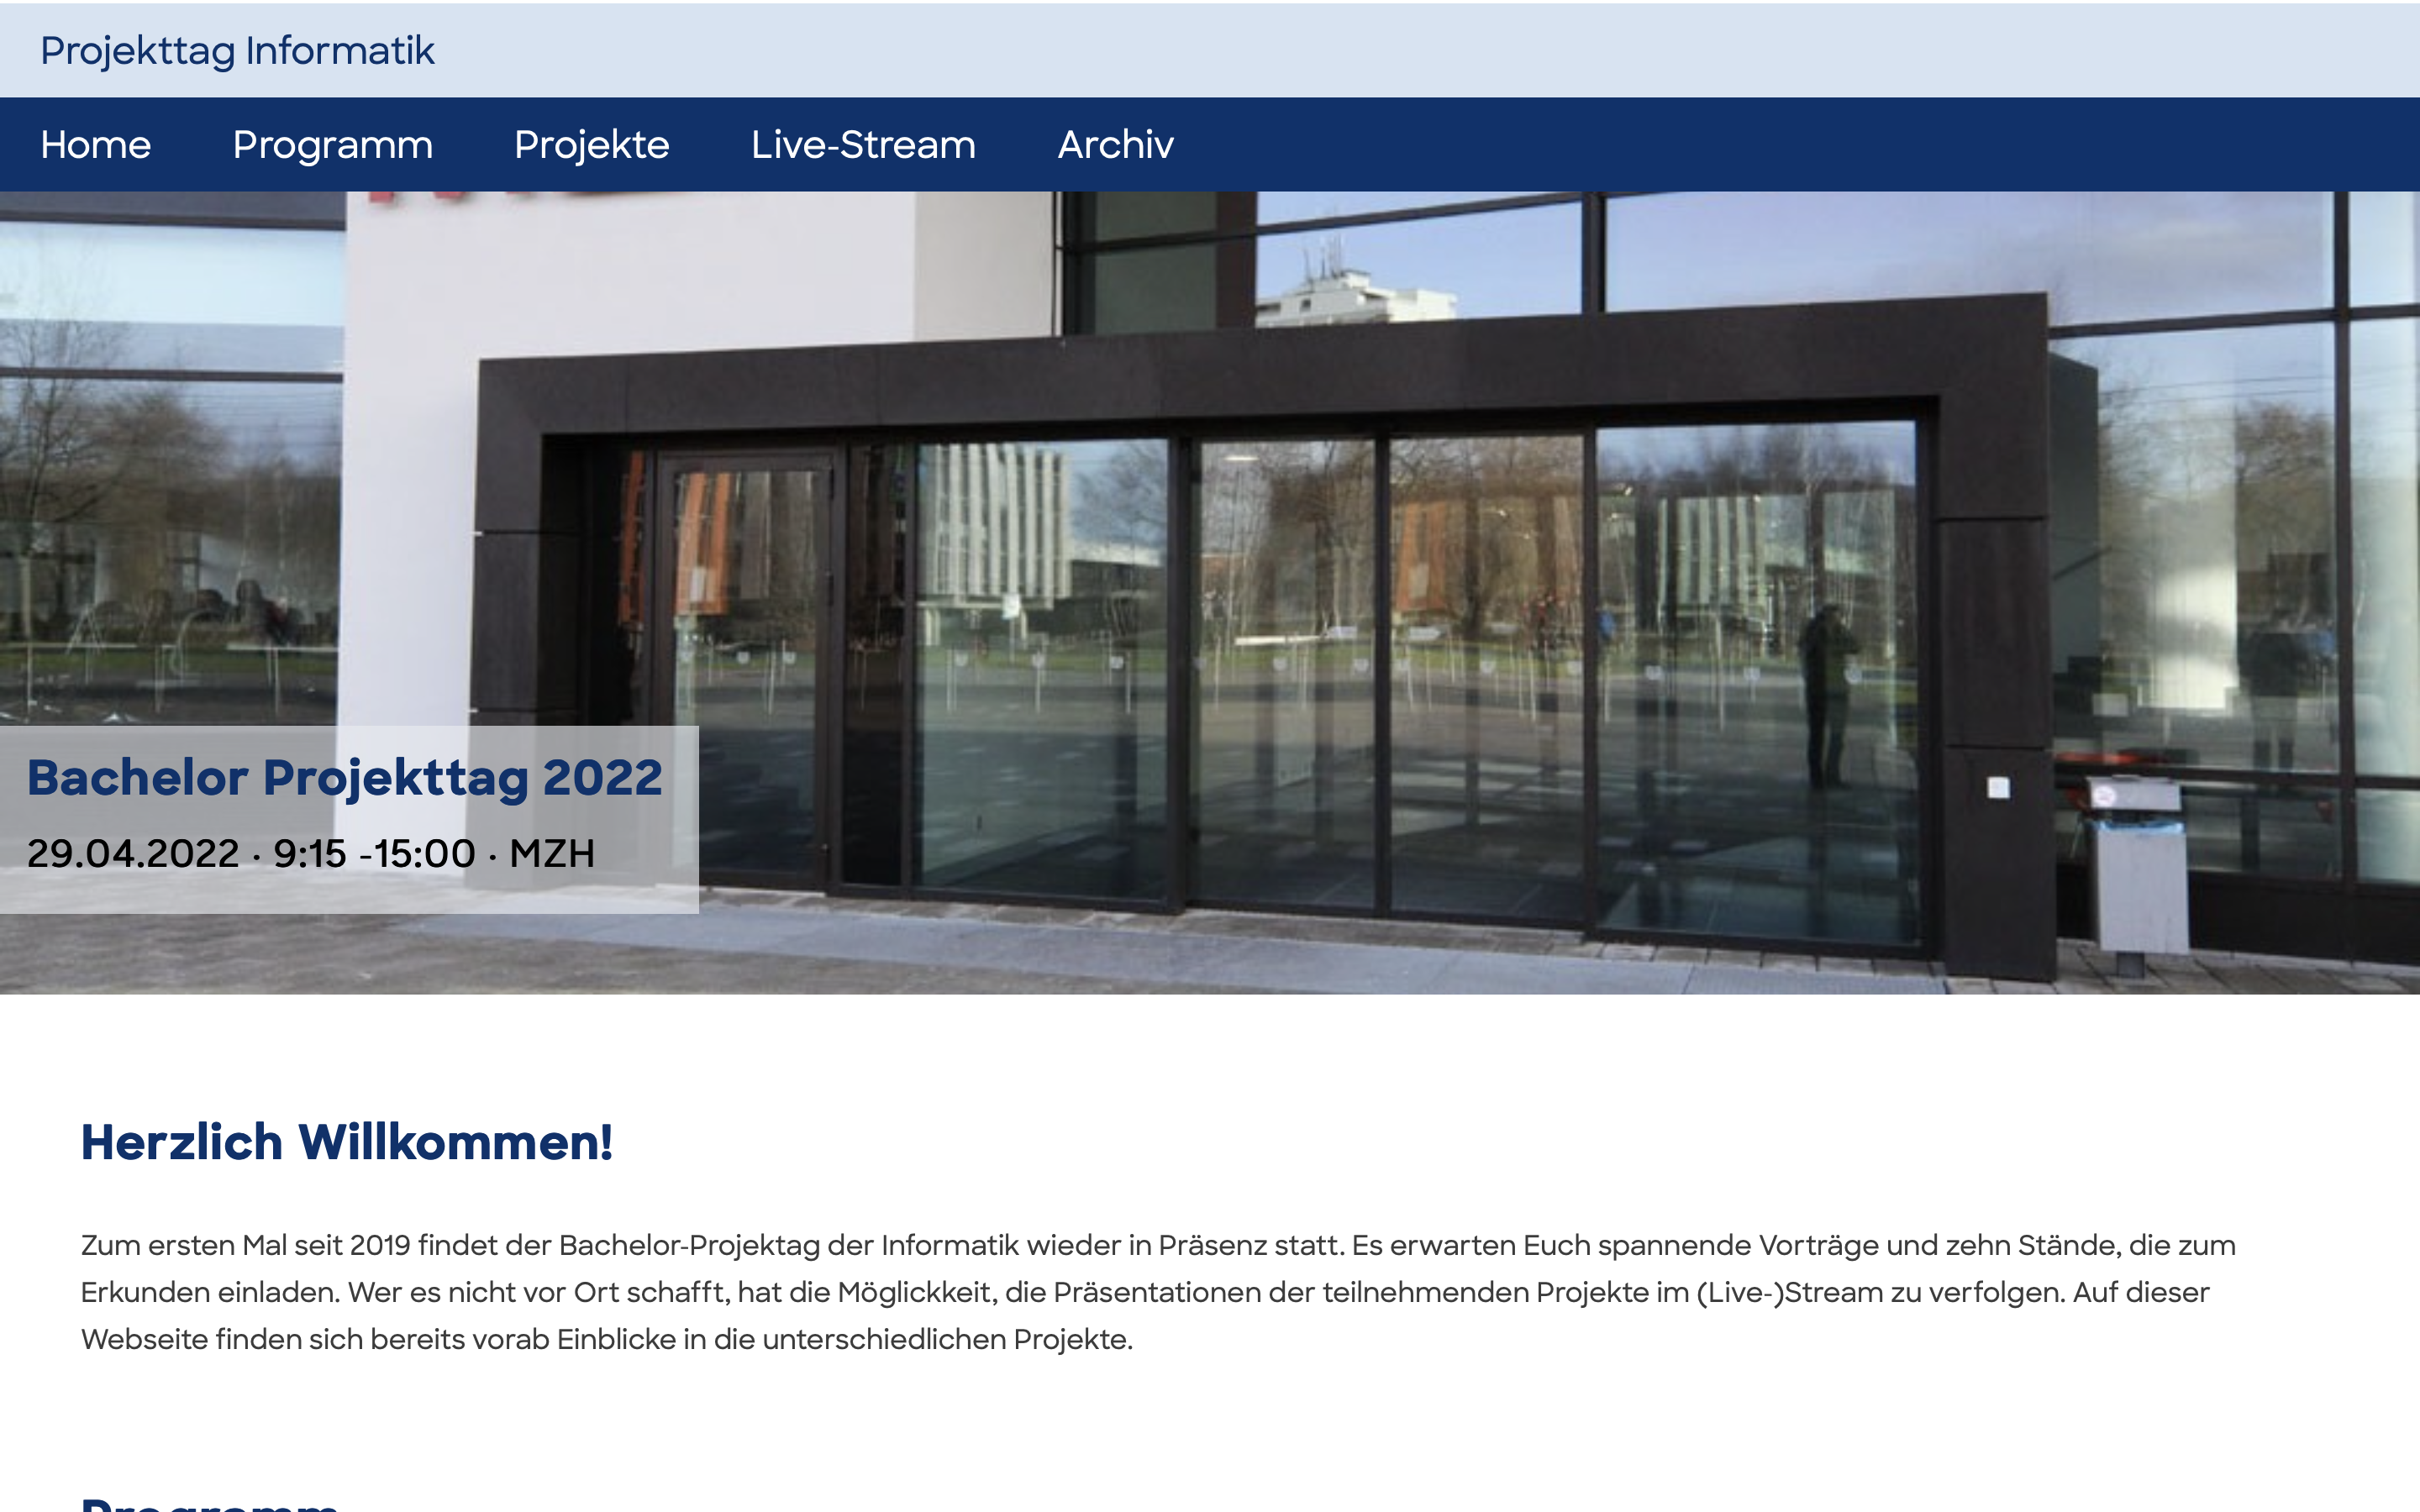 Projekttags-Webseite 2022 Bachelor